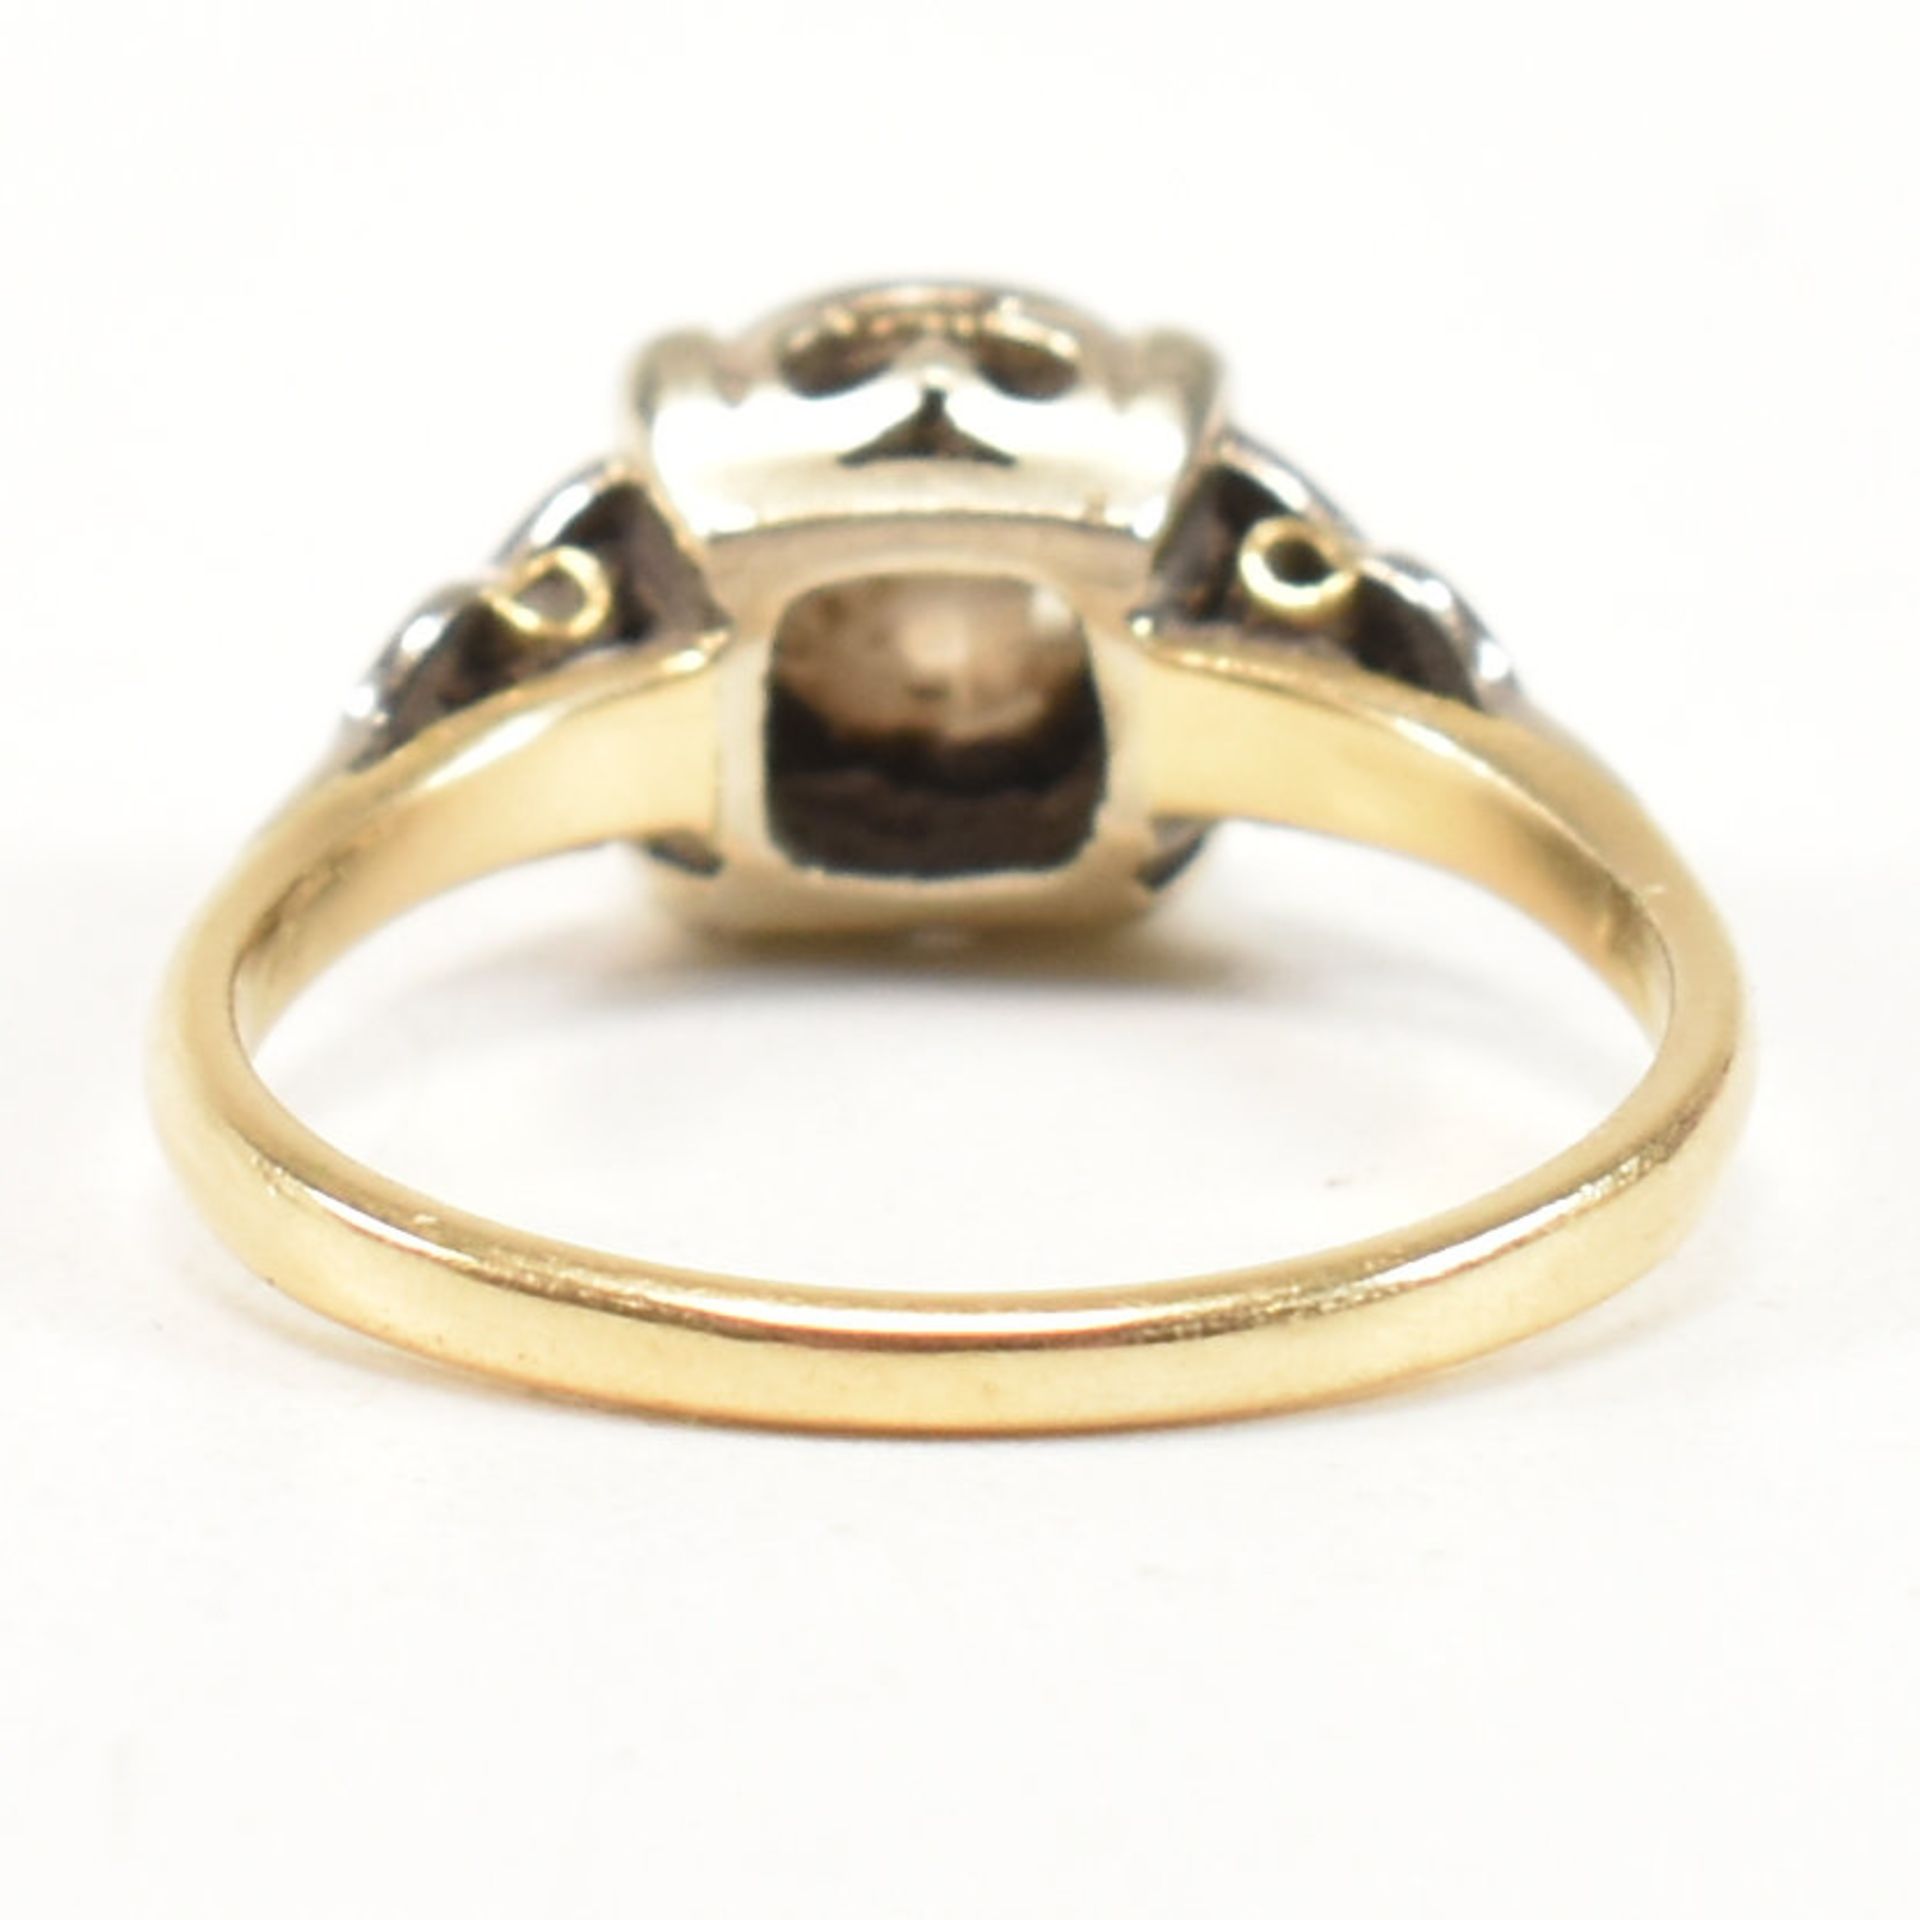 EDWARDIAN 18CT GOLD & PLATINUM DIAMOND SOLITAIRE RING - Image 5 of 8